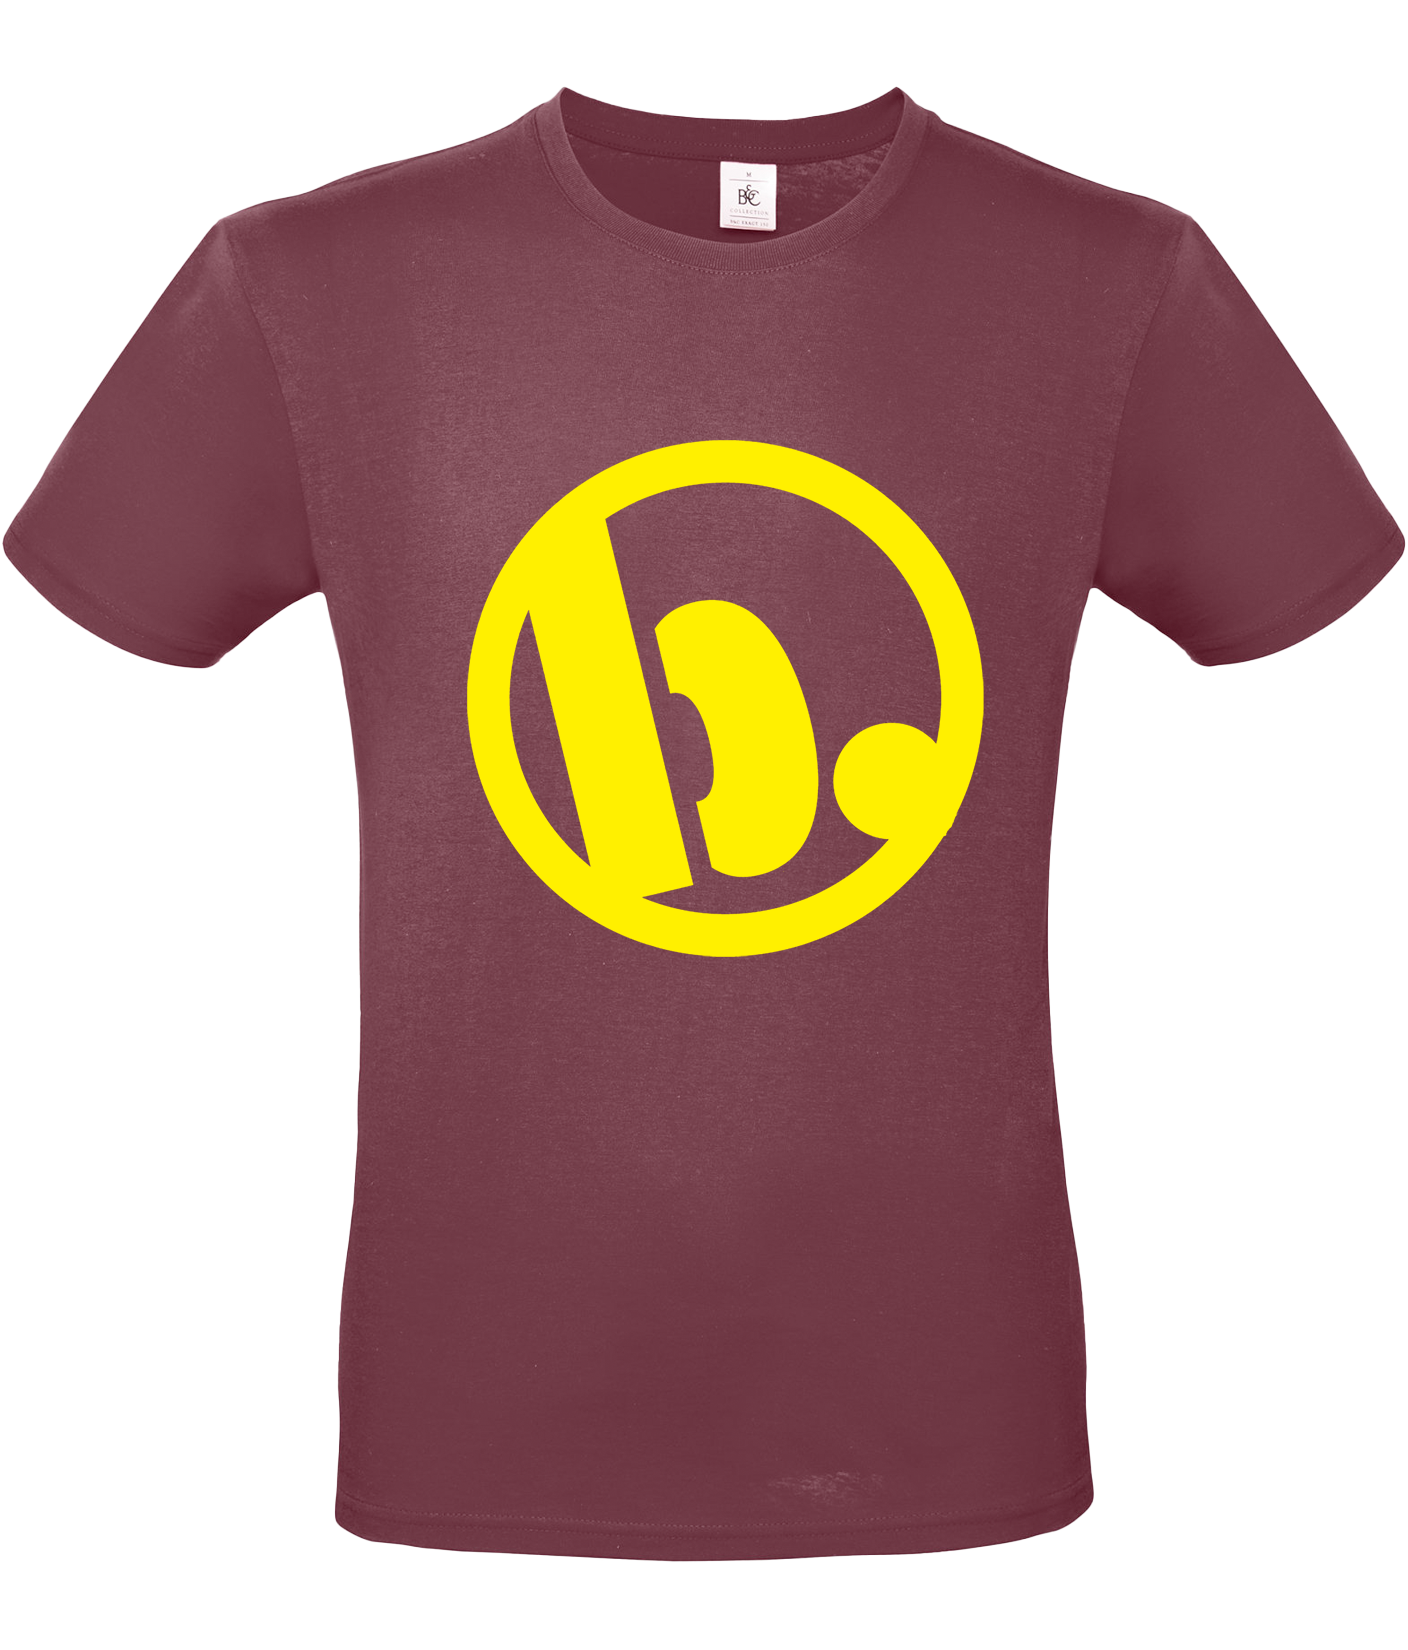 Blingpoint - Tshirt großes B